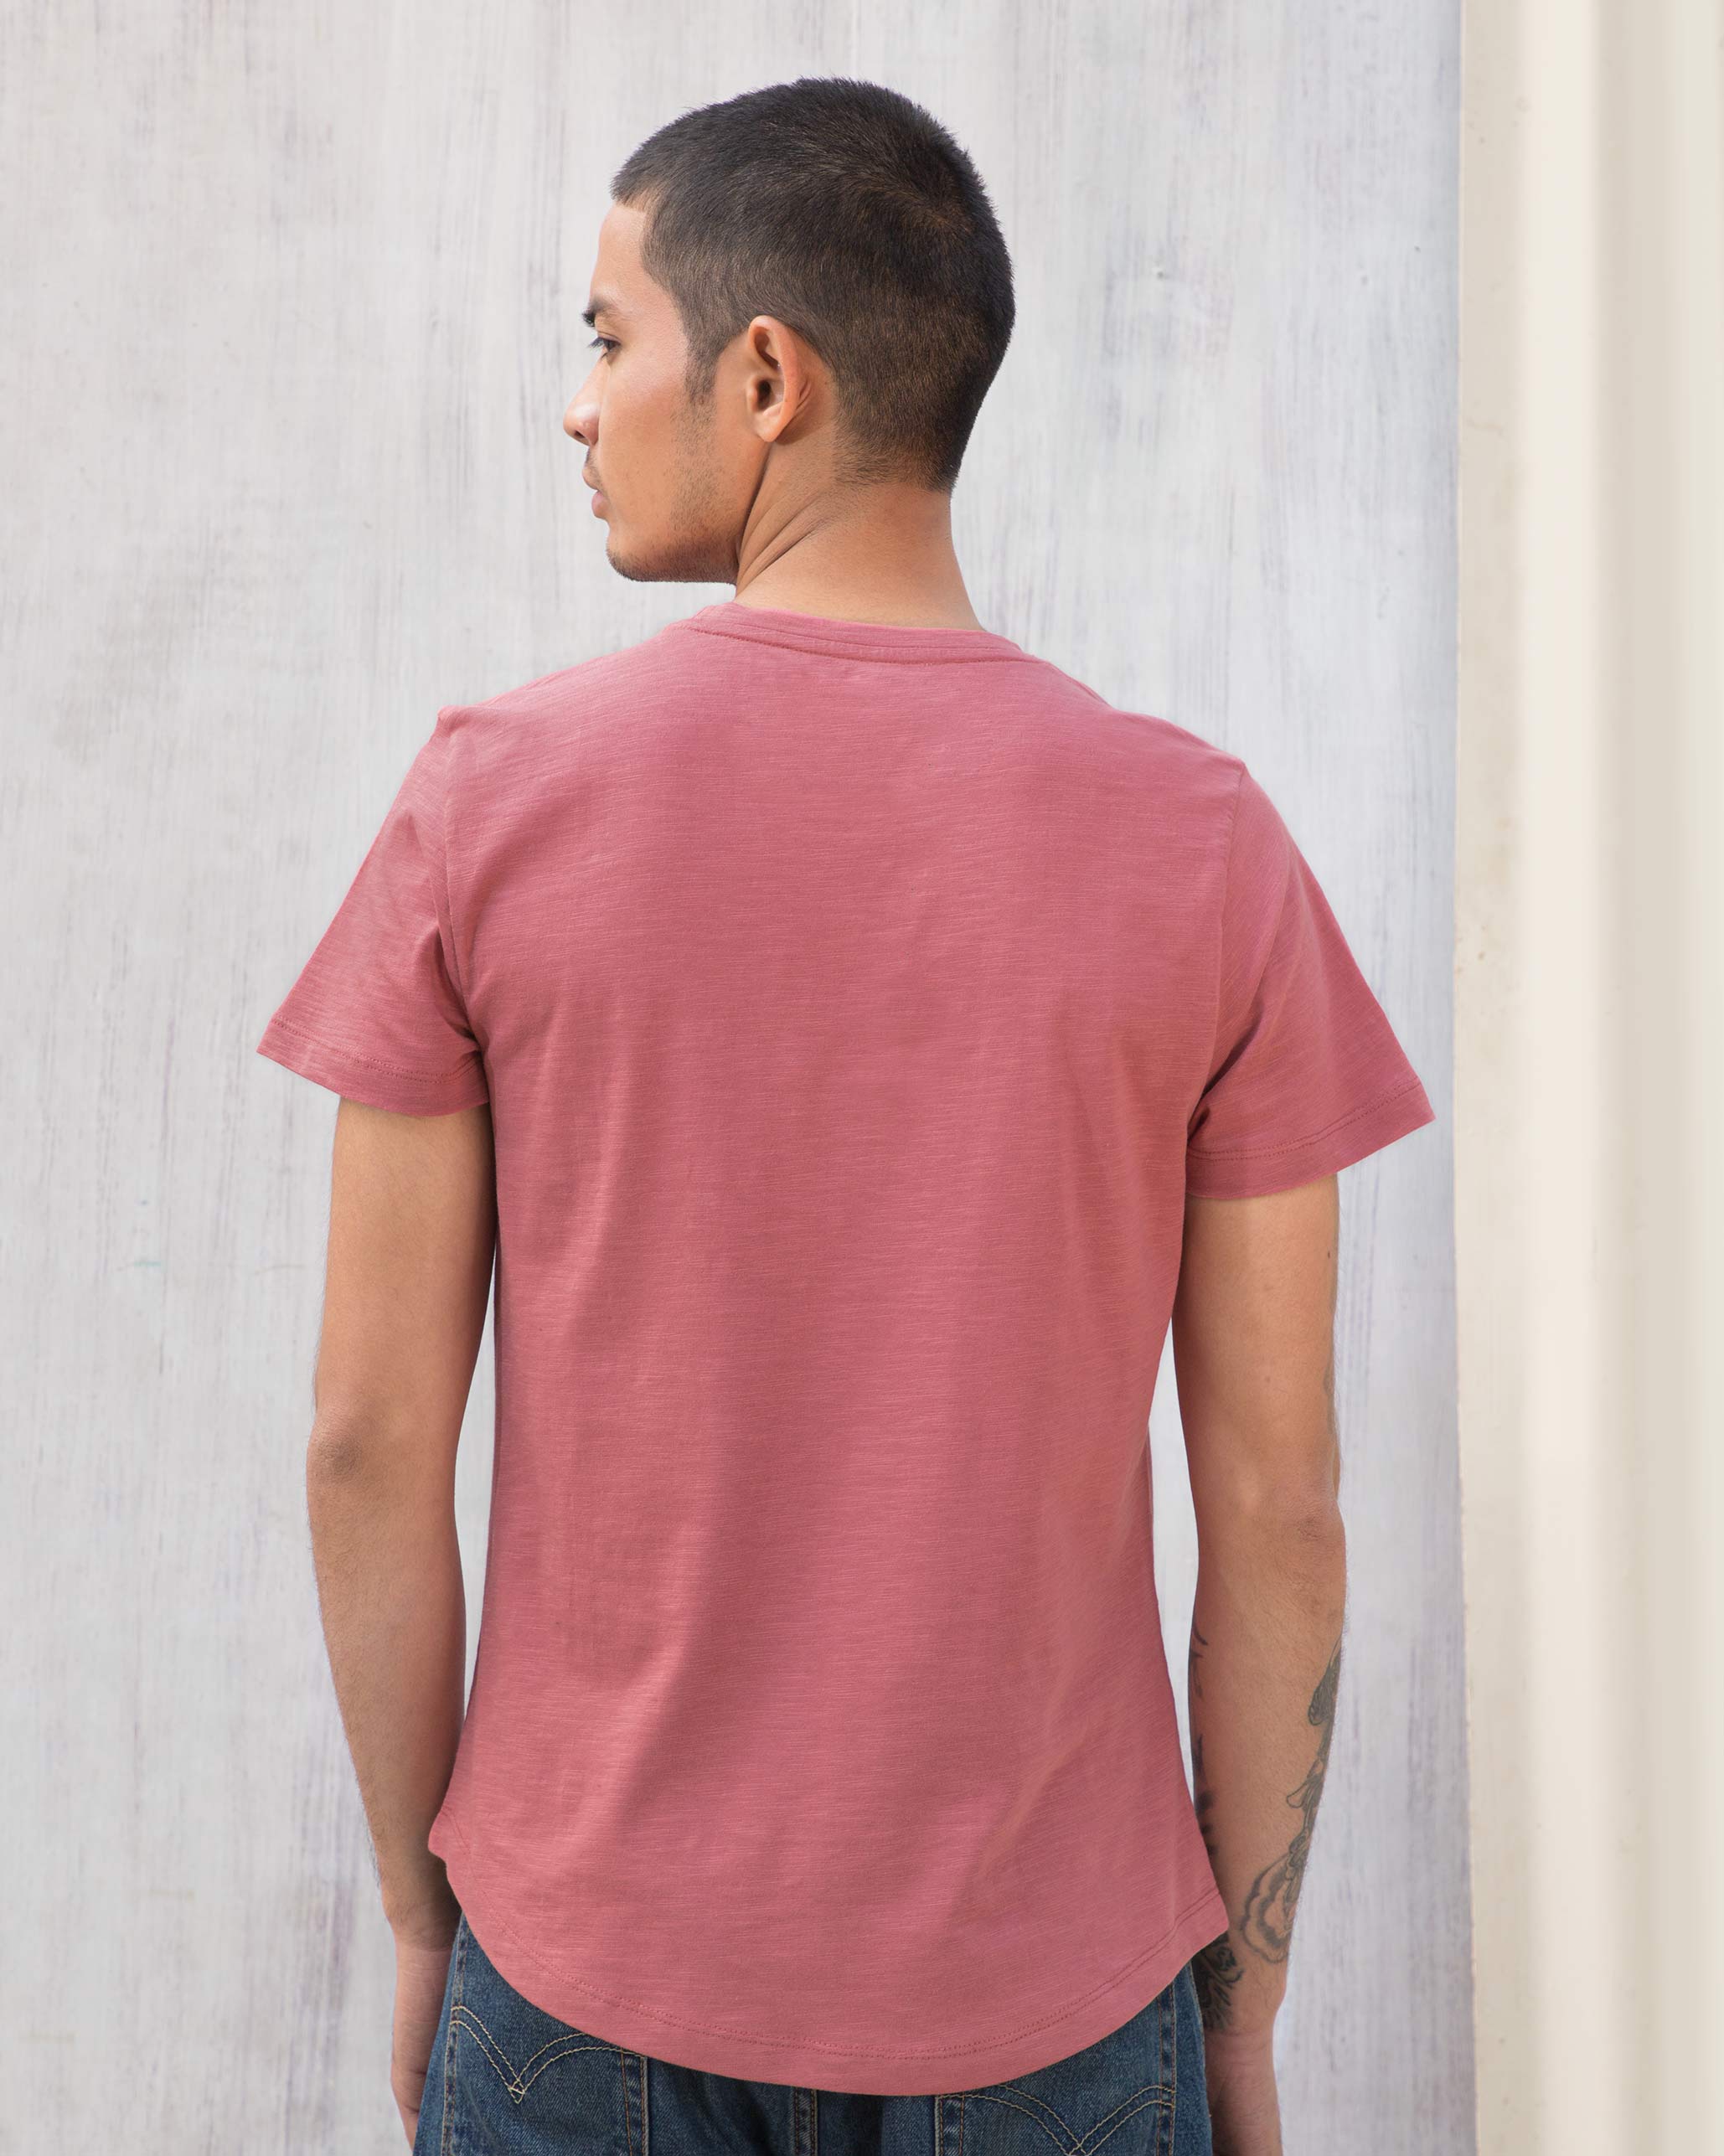 Pocket T-Shirt - Pink